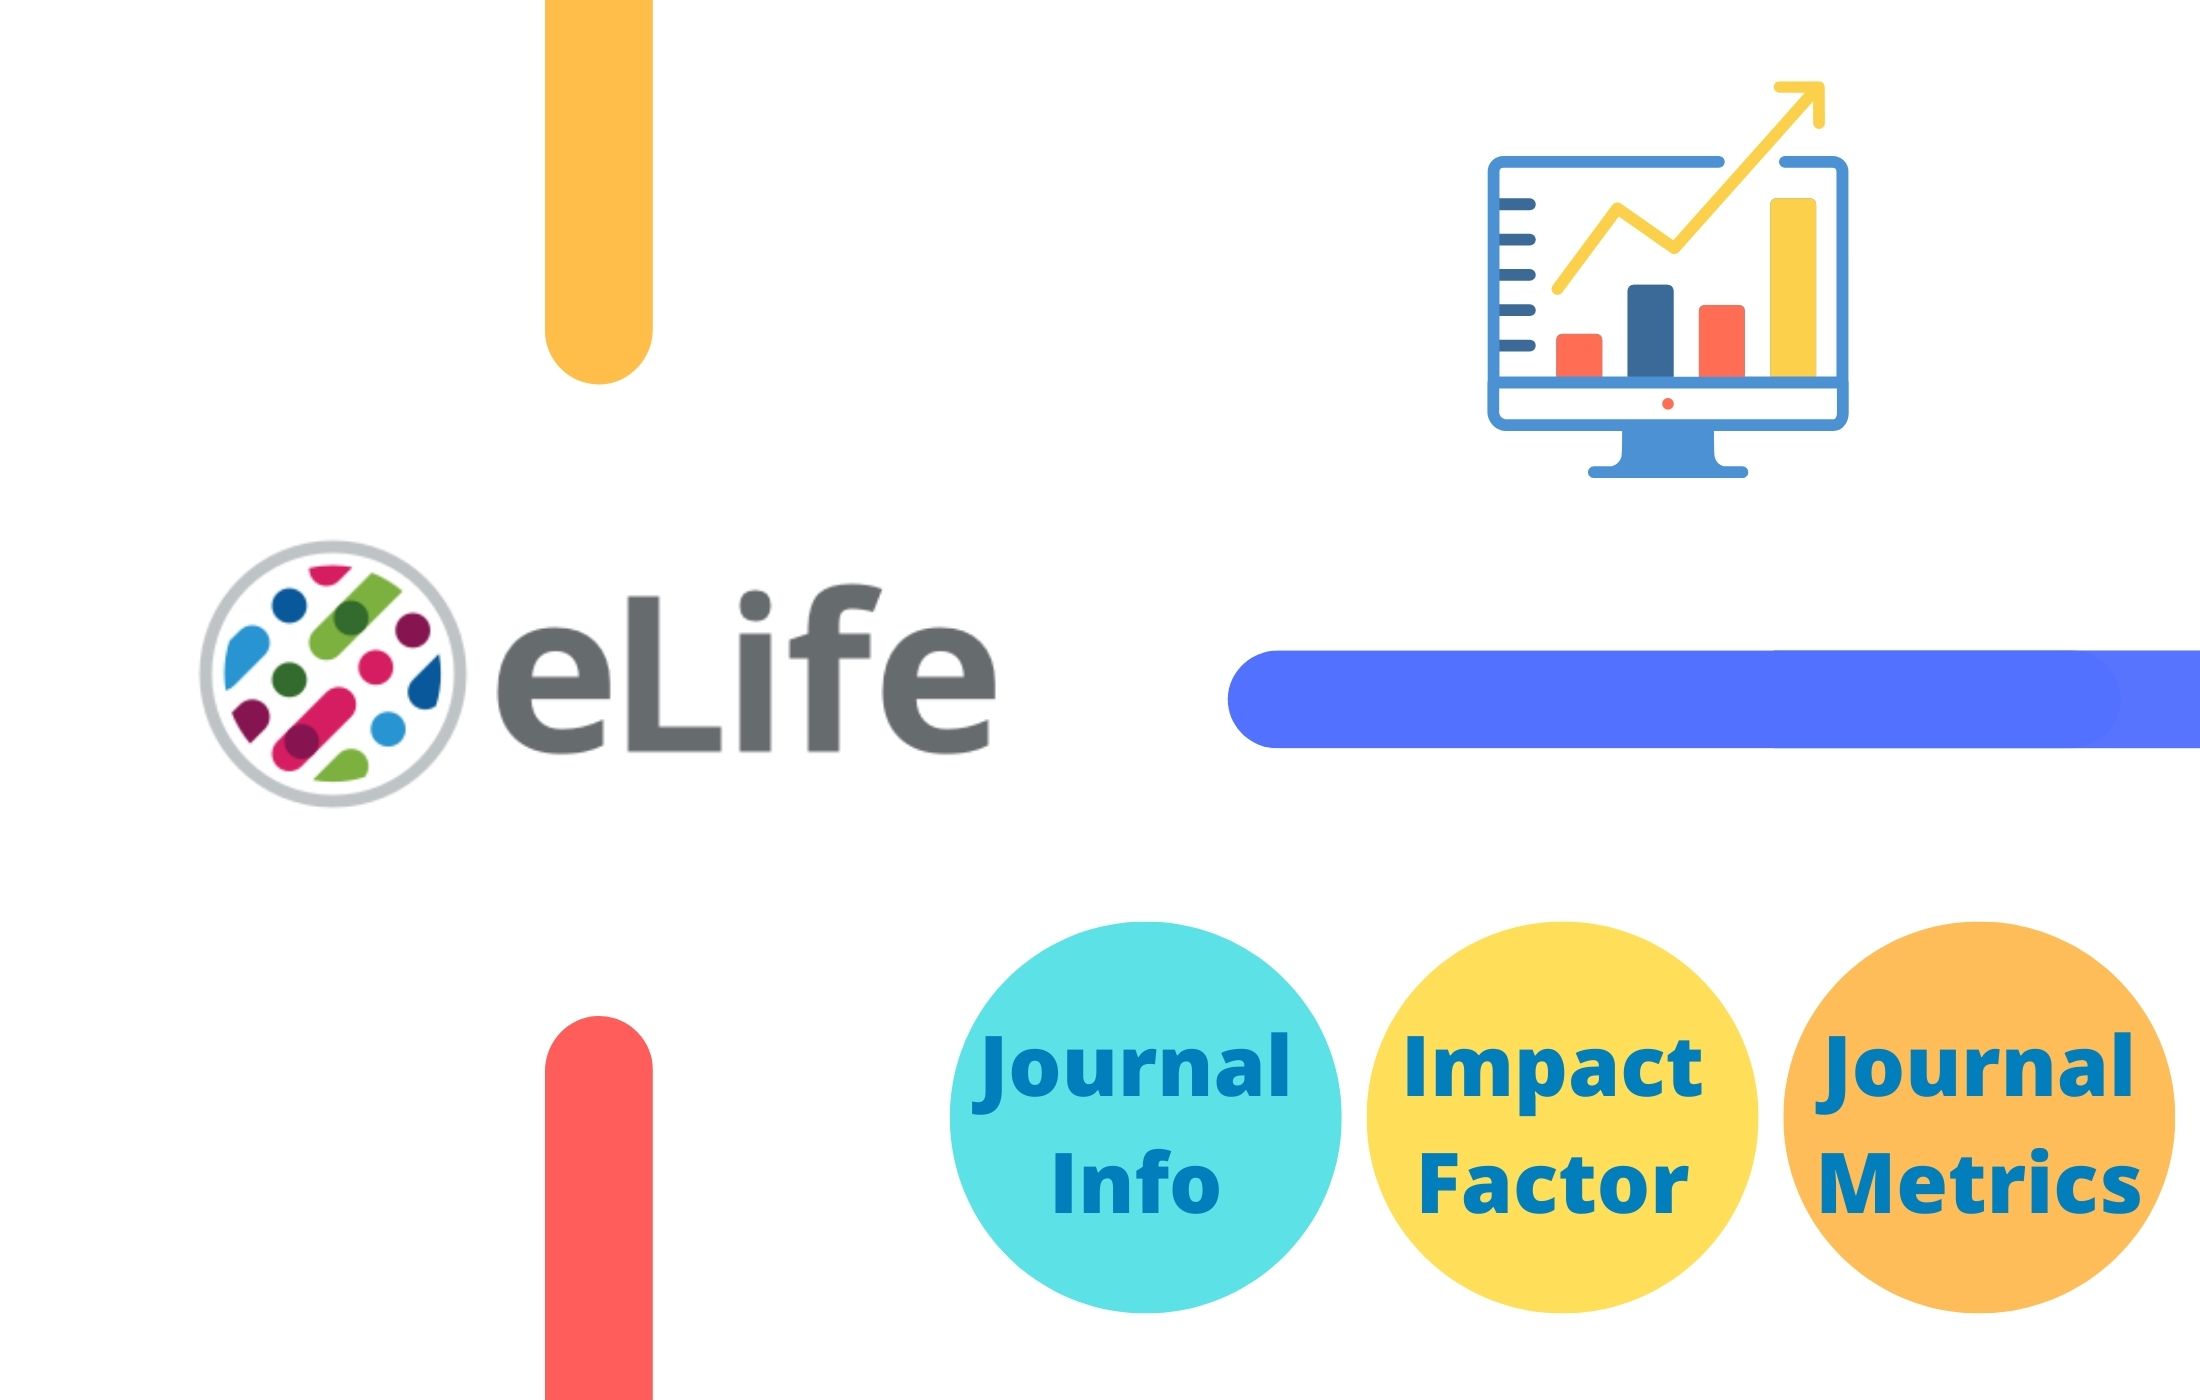 eLife impact factor